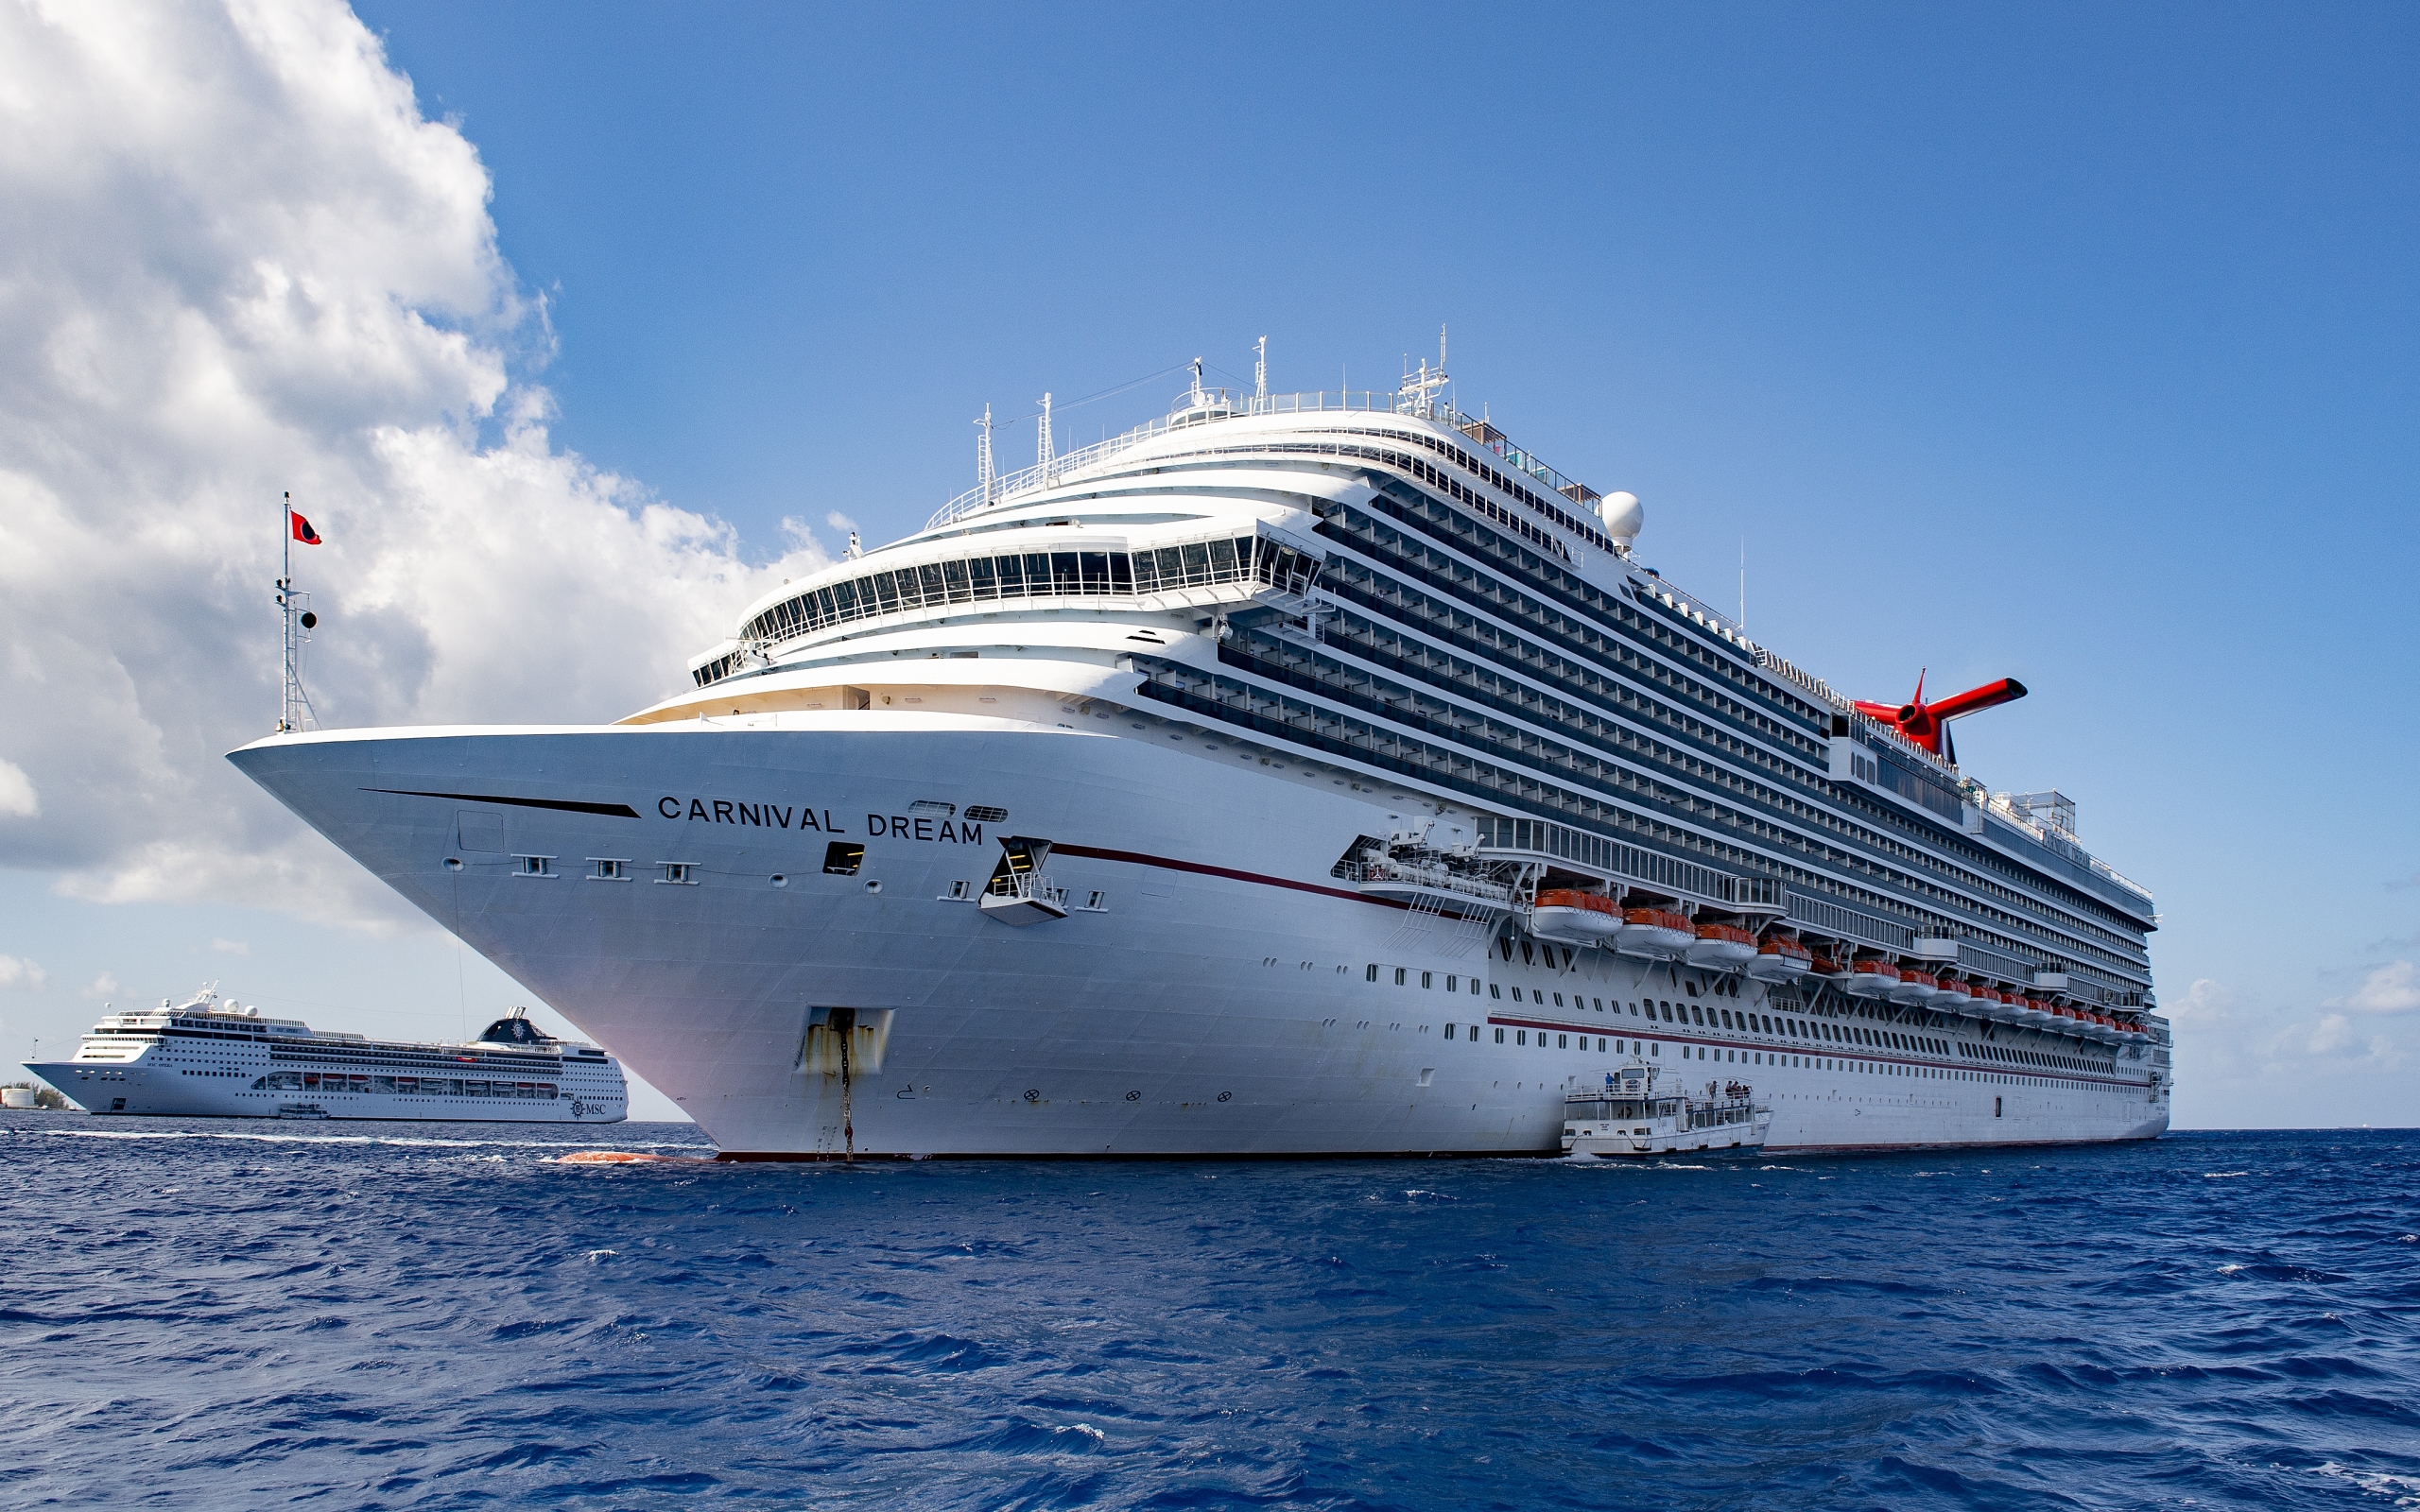 sea wallpaper,cruise ship,water transportation,ship,vehicle,passenger ship